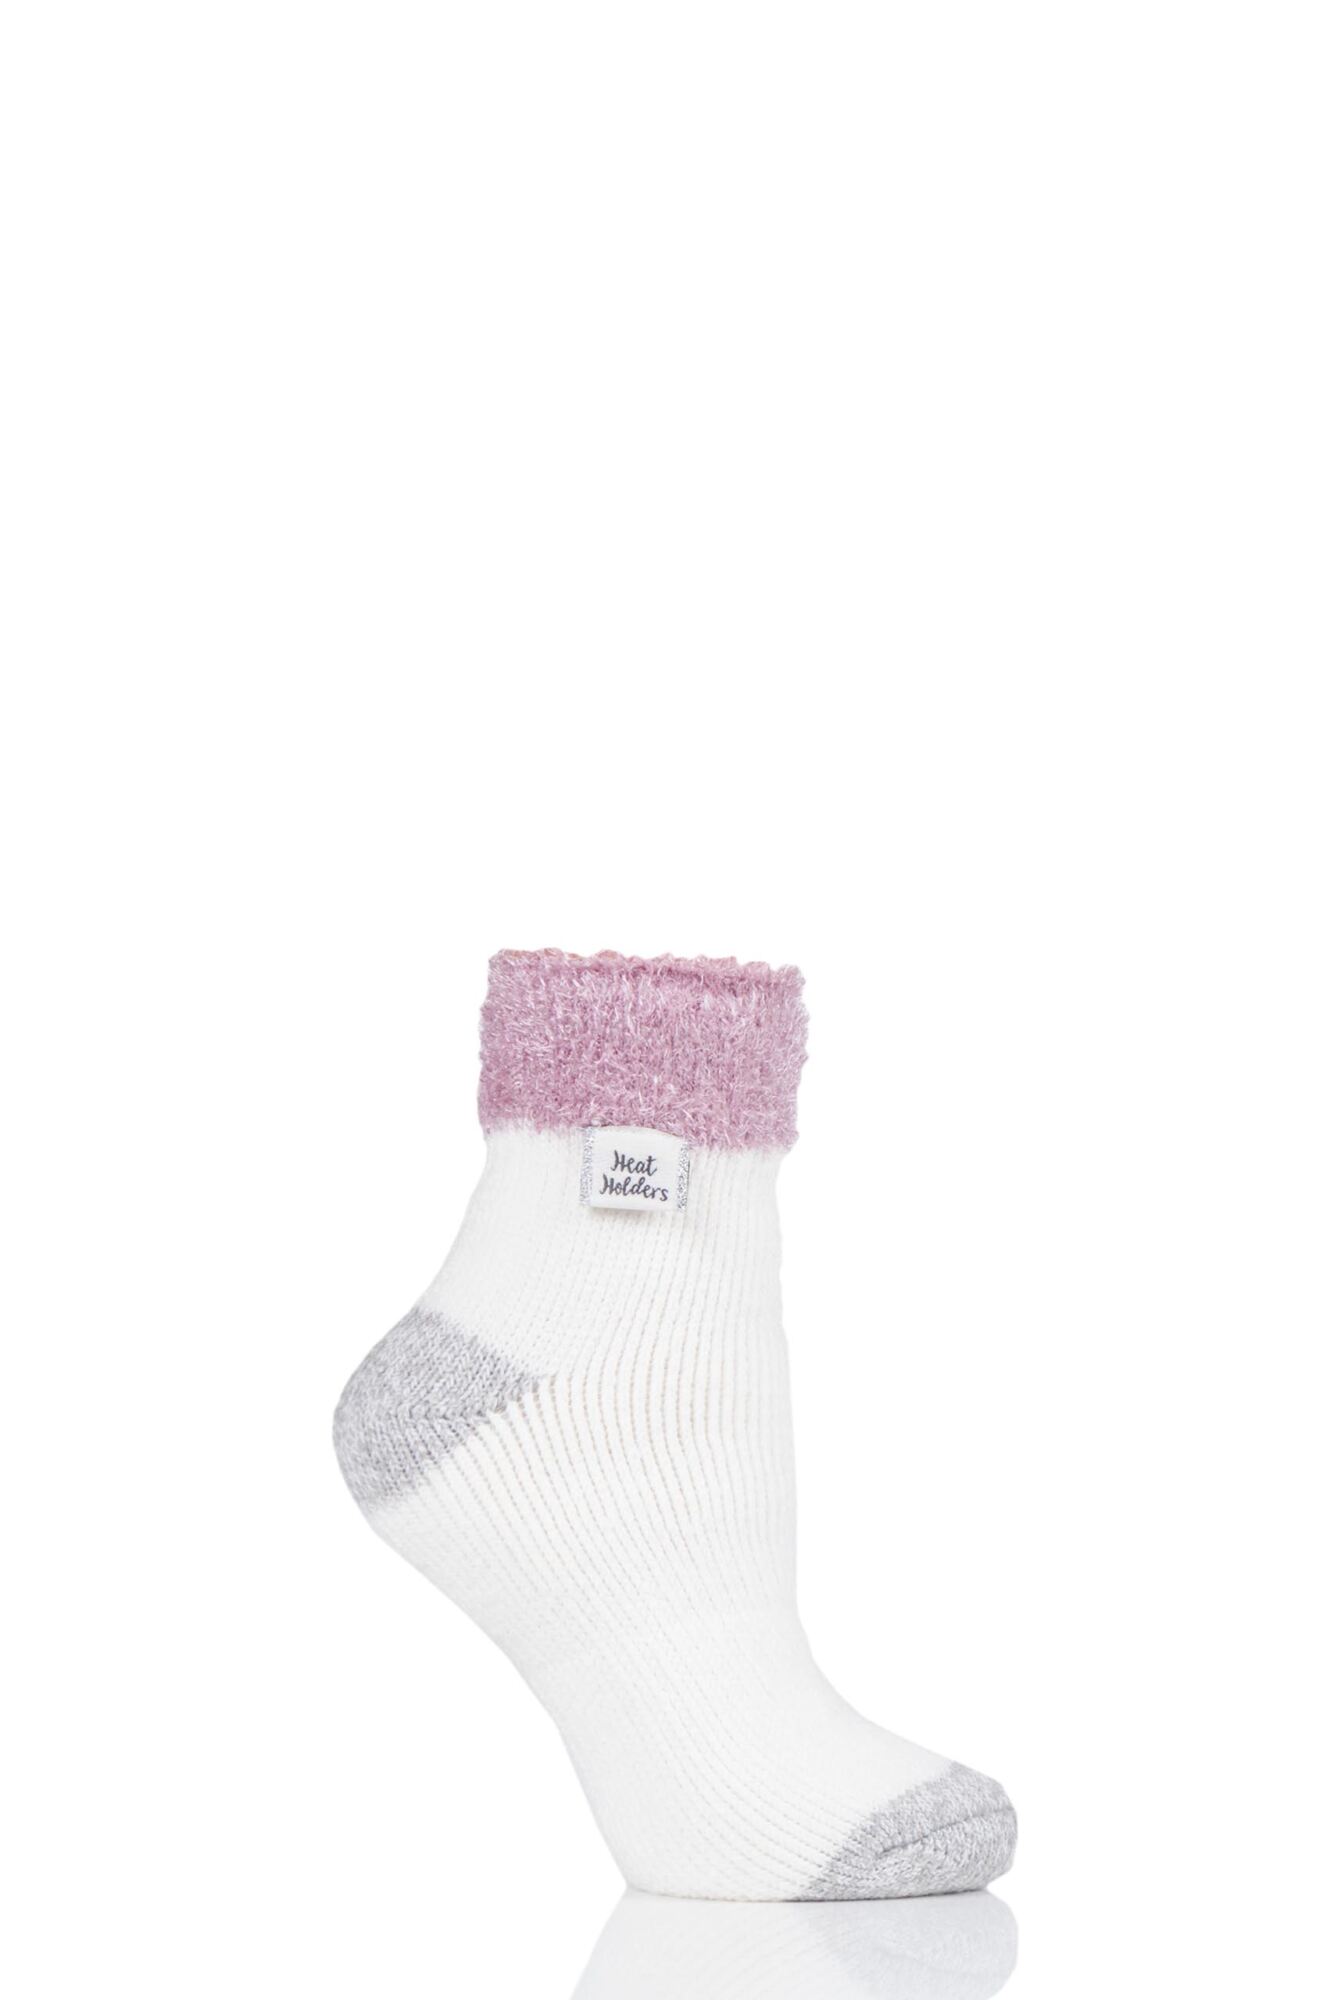 1 Pair Sleep Feather Top Socks Ladies - Heat Holders